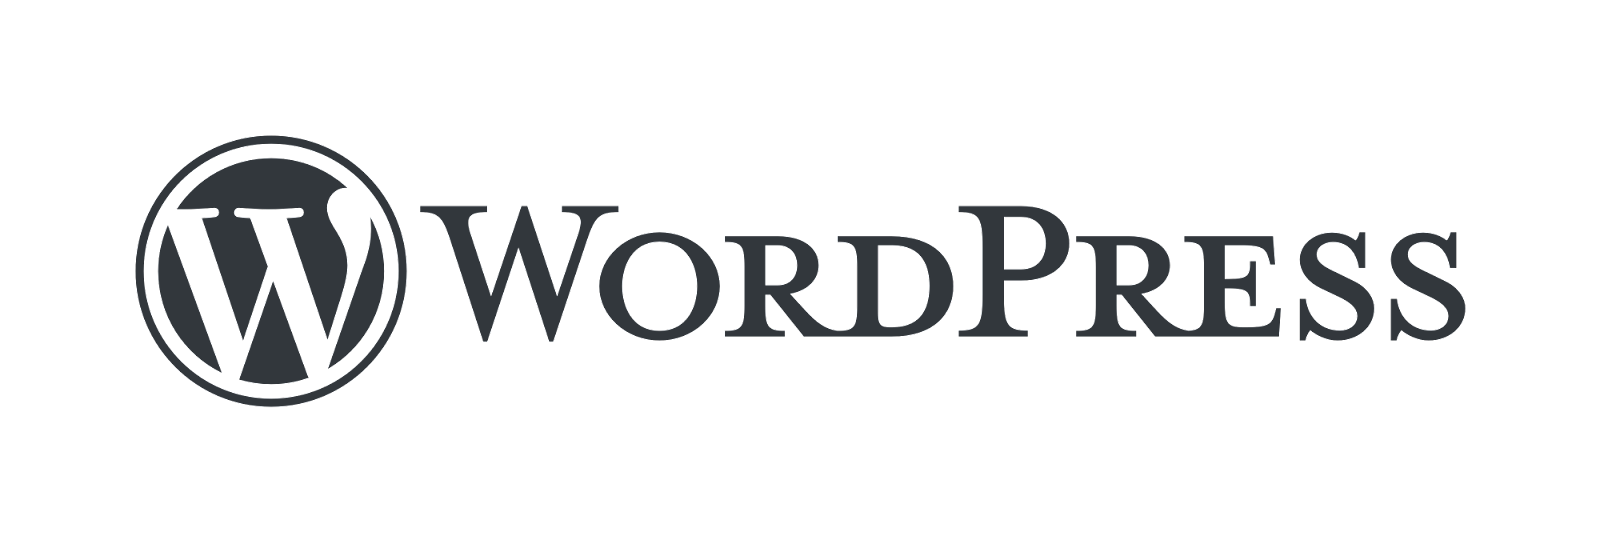 Best WordPress Hosting: WordPress Logo